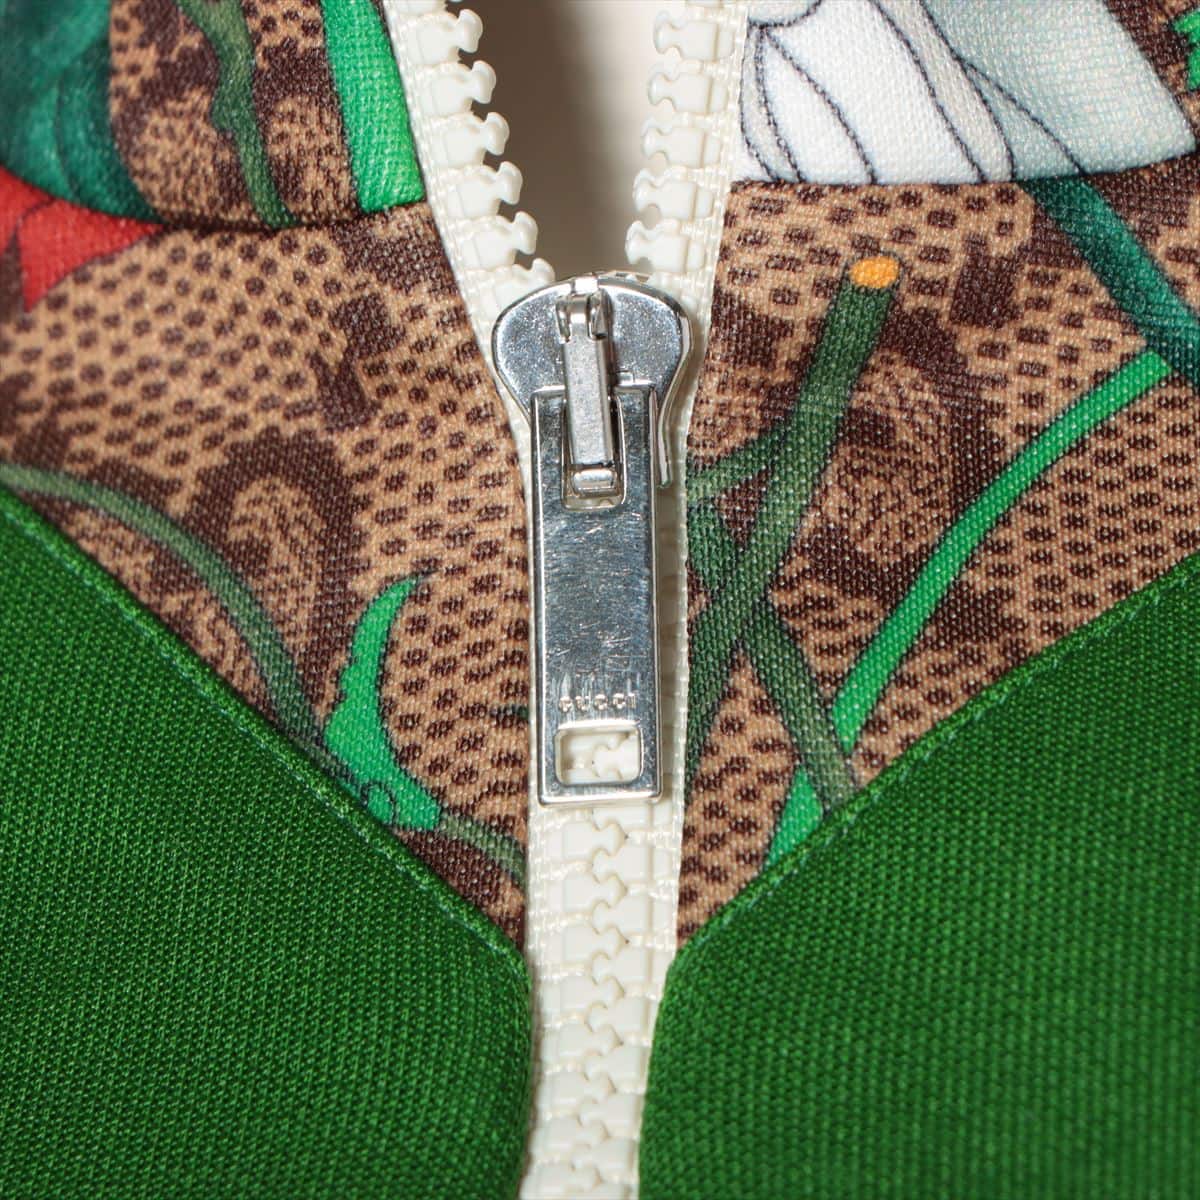 Gucci Cotton & polyester Sweatsuit M Ladies' Brown  GG flora